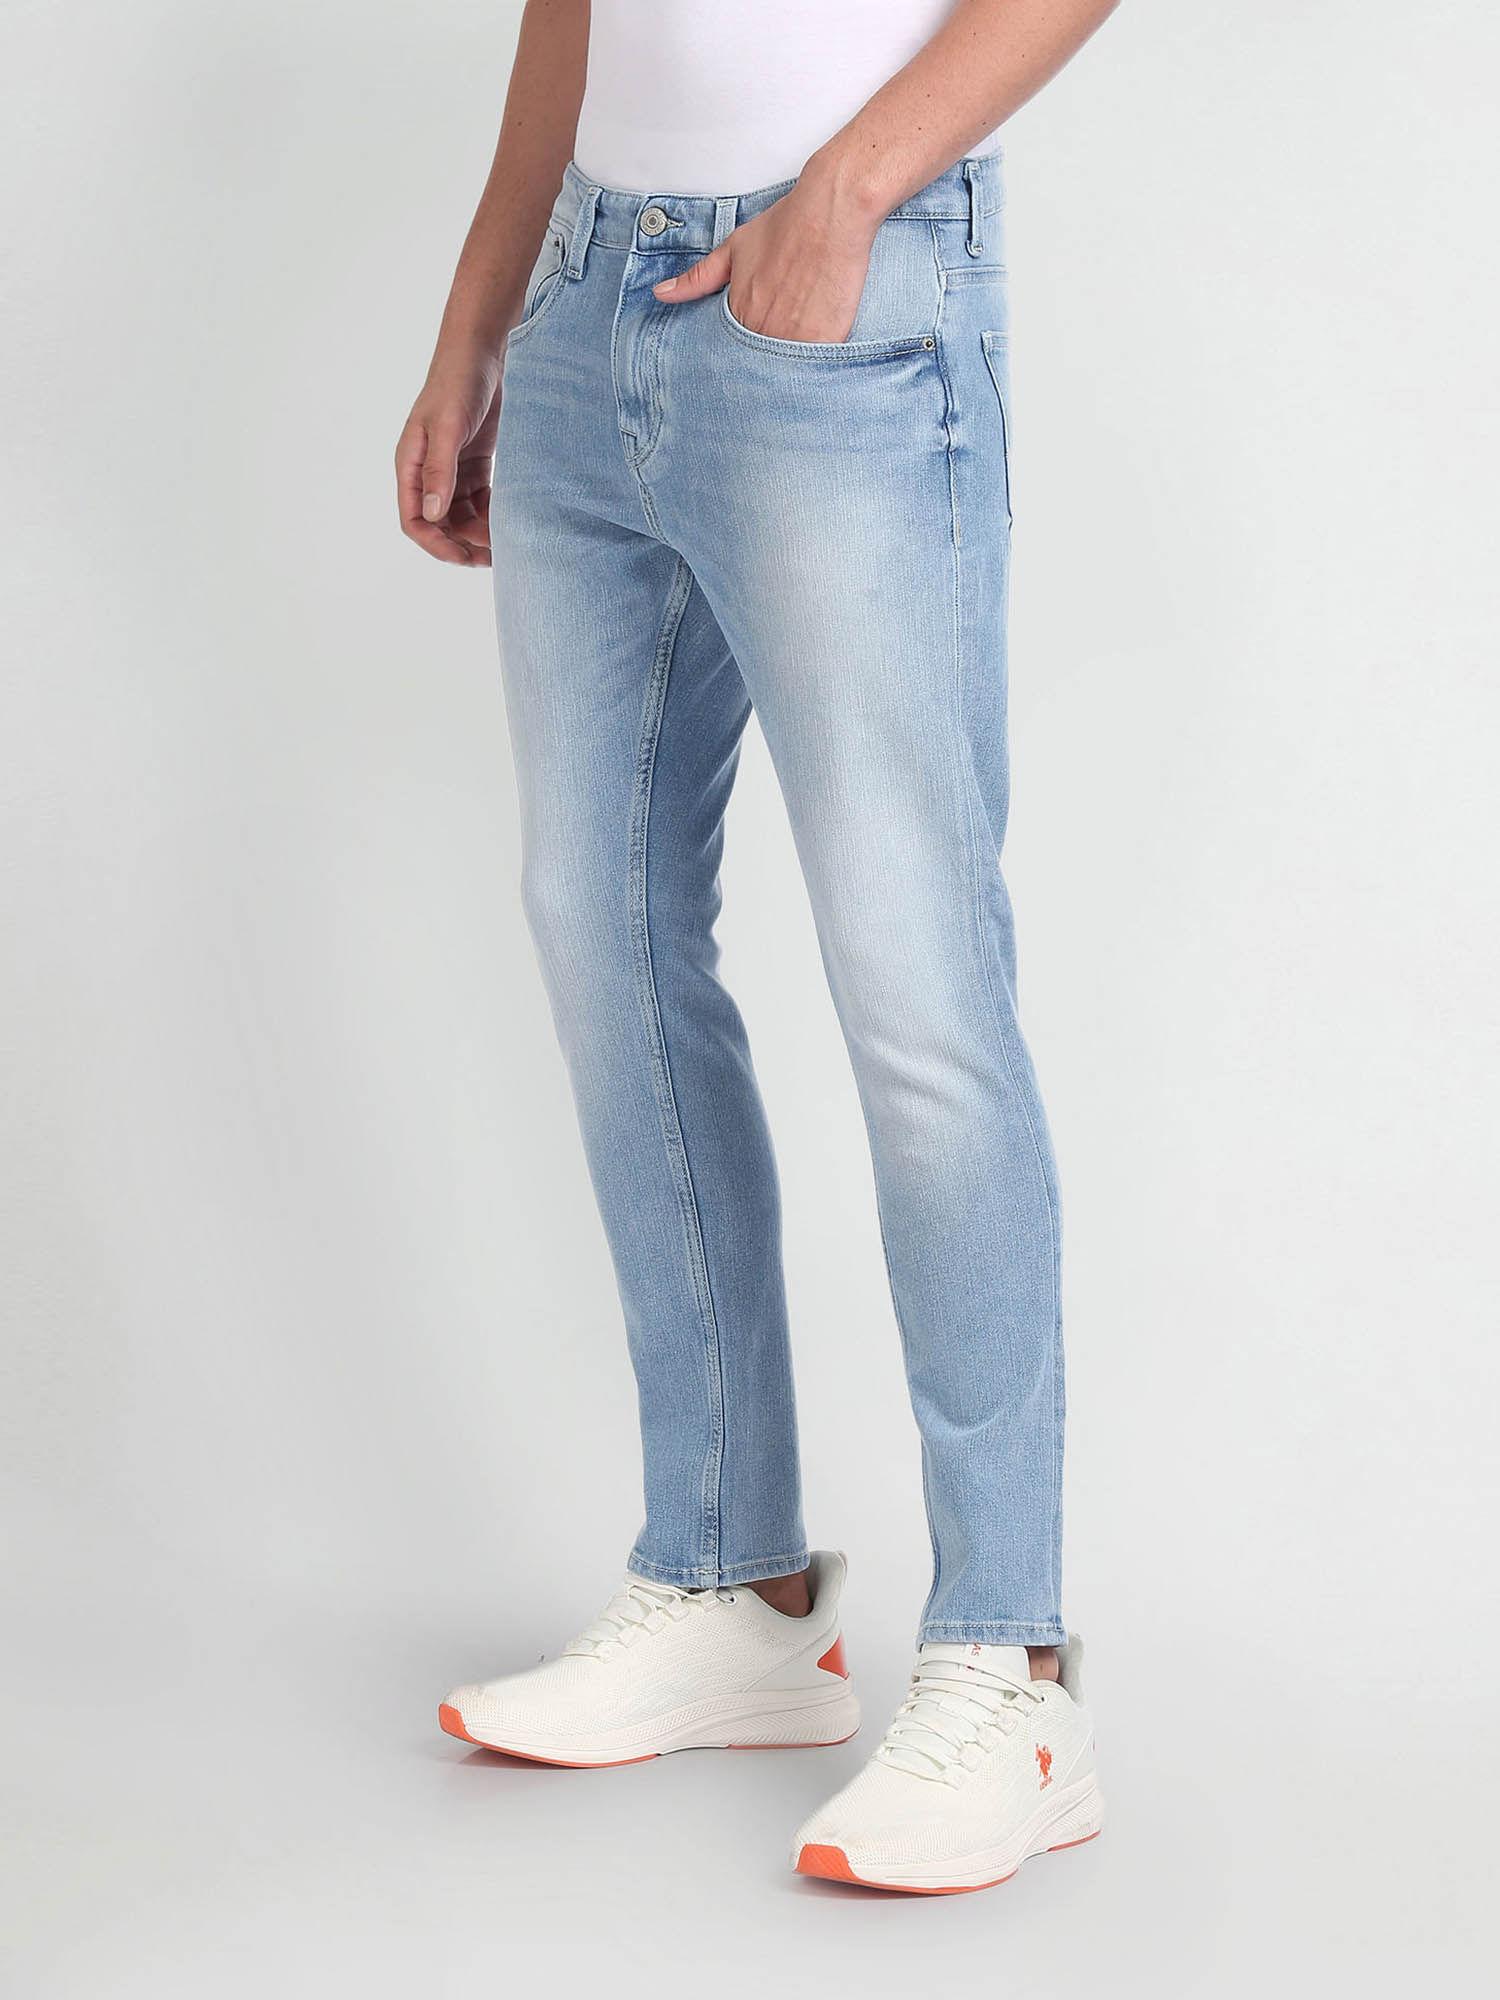 henry-blue-jeans